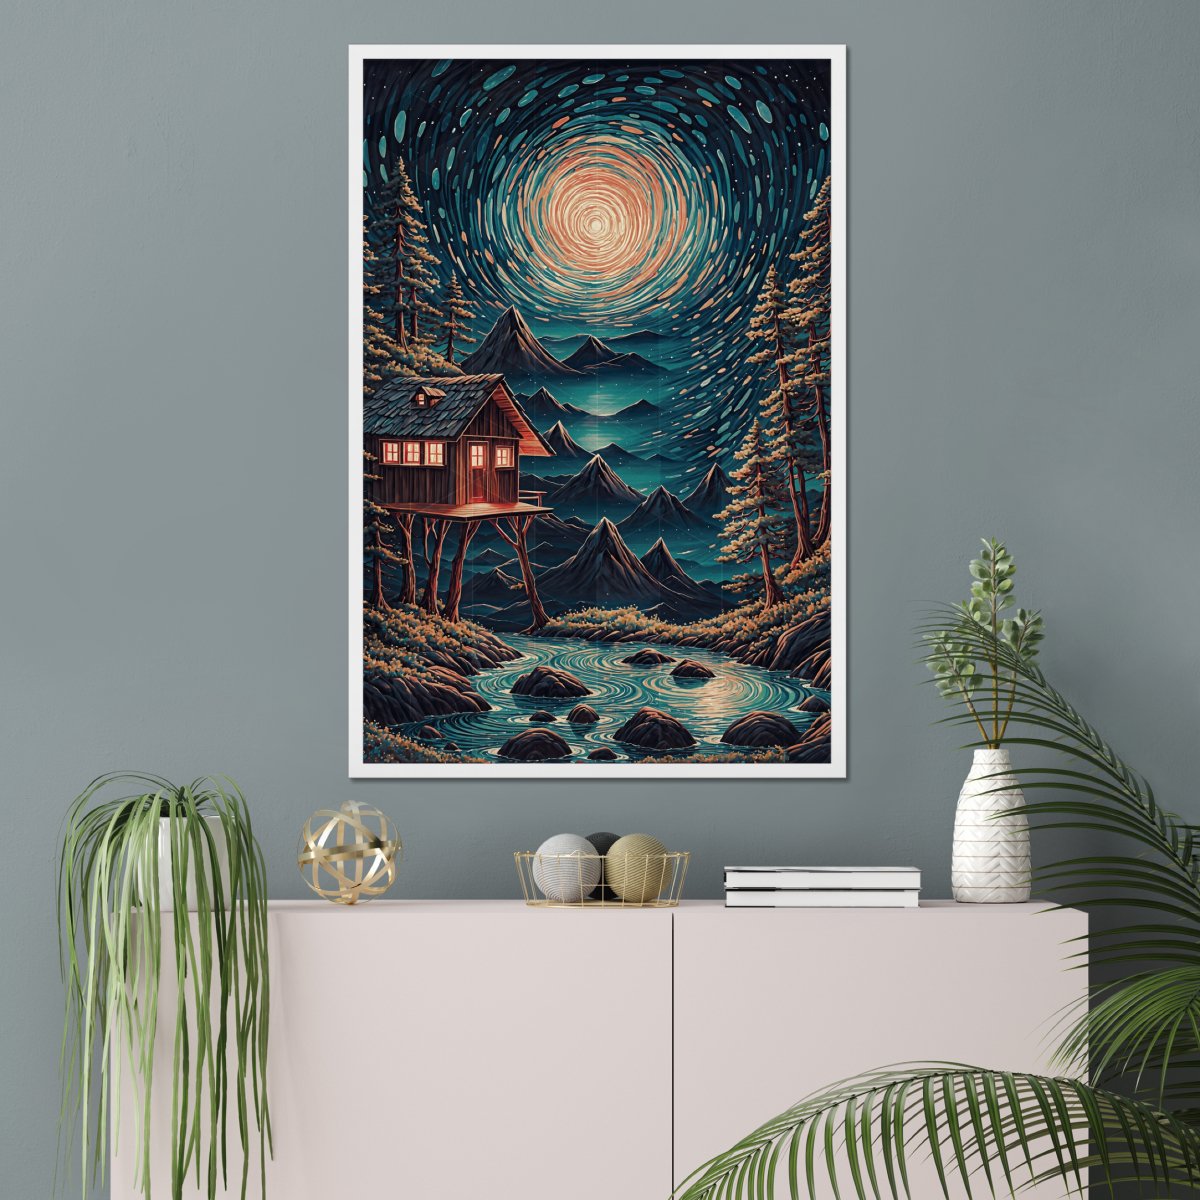 Distant vortex hut - Art print - Poster - Ever colorful